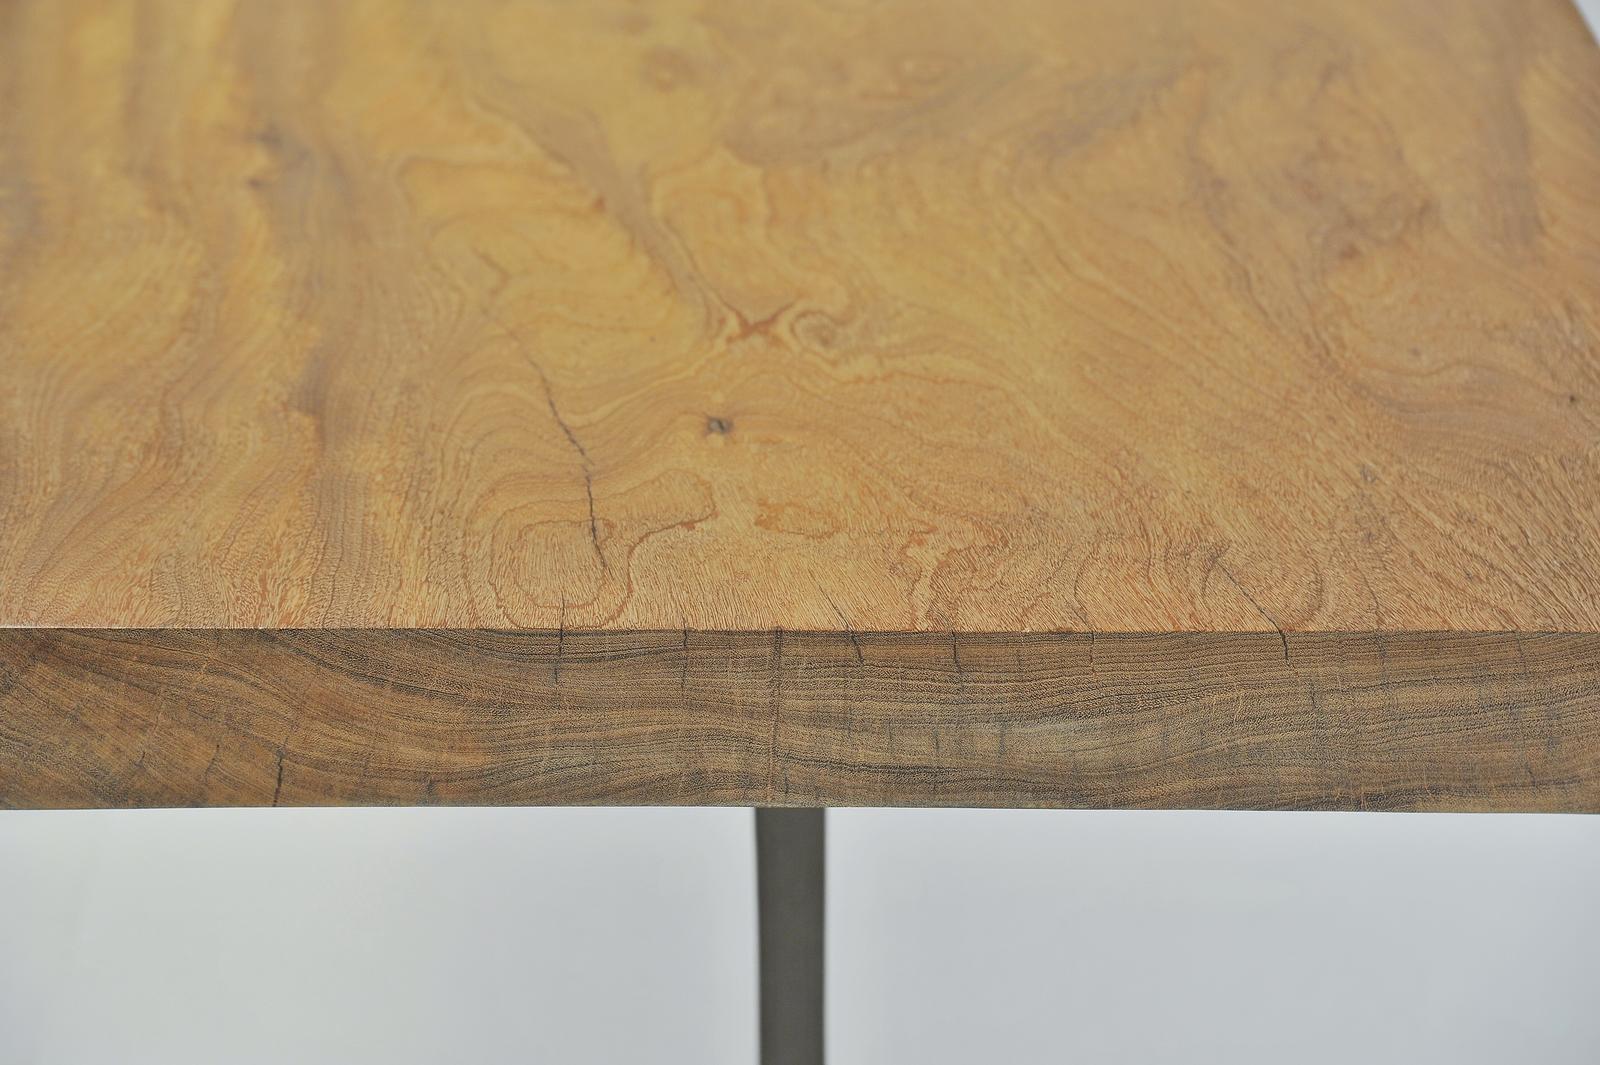 Cast Bespoke Table, Antique Hardwood, Sand cast Aluminum Base by P. Tendercool For Sale